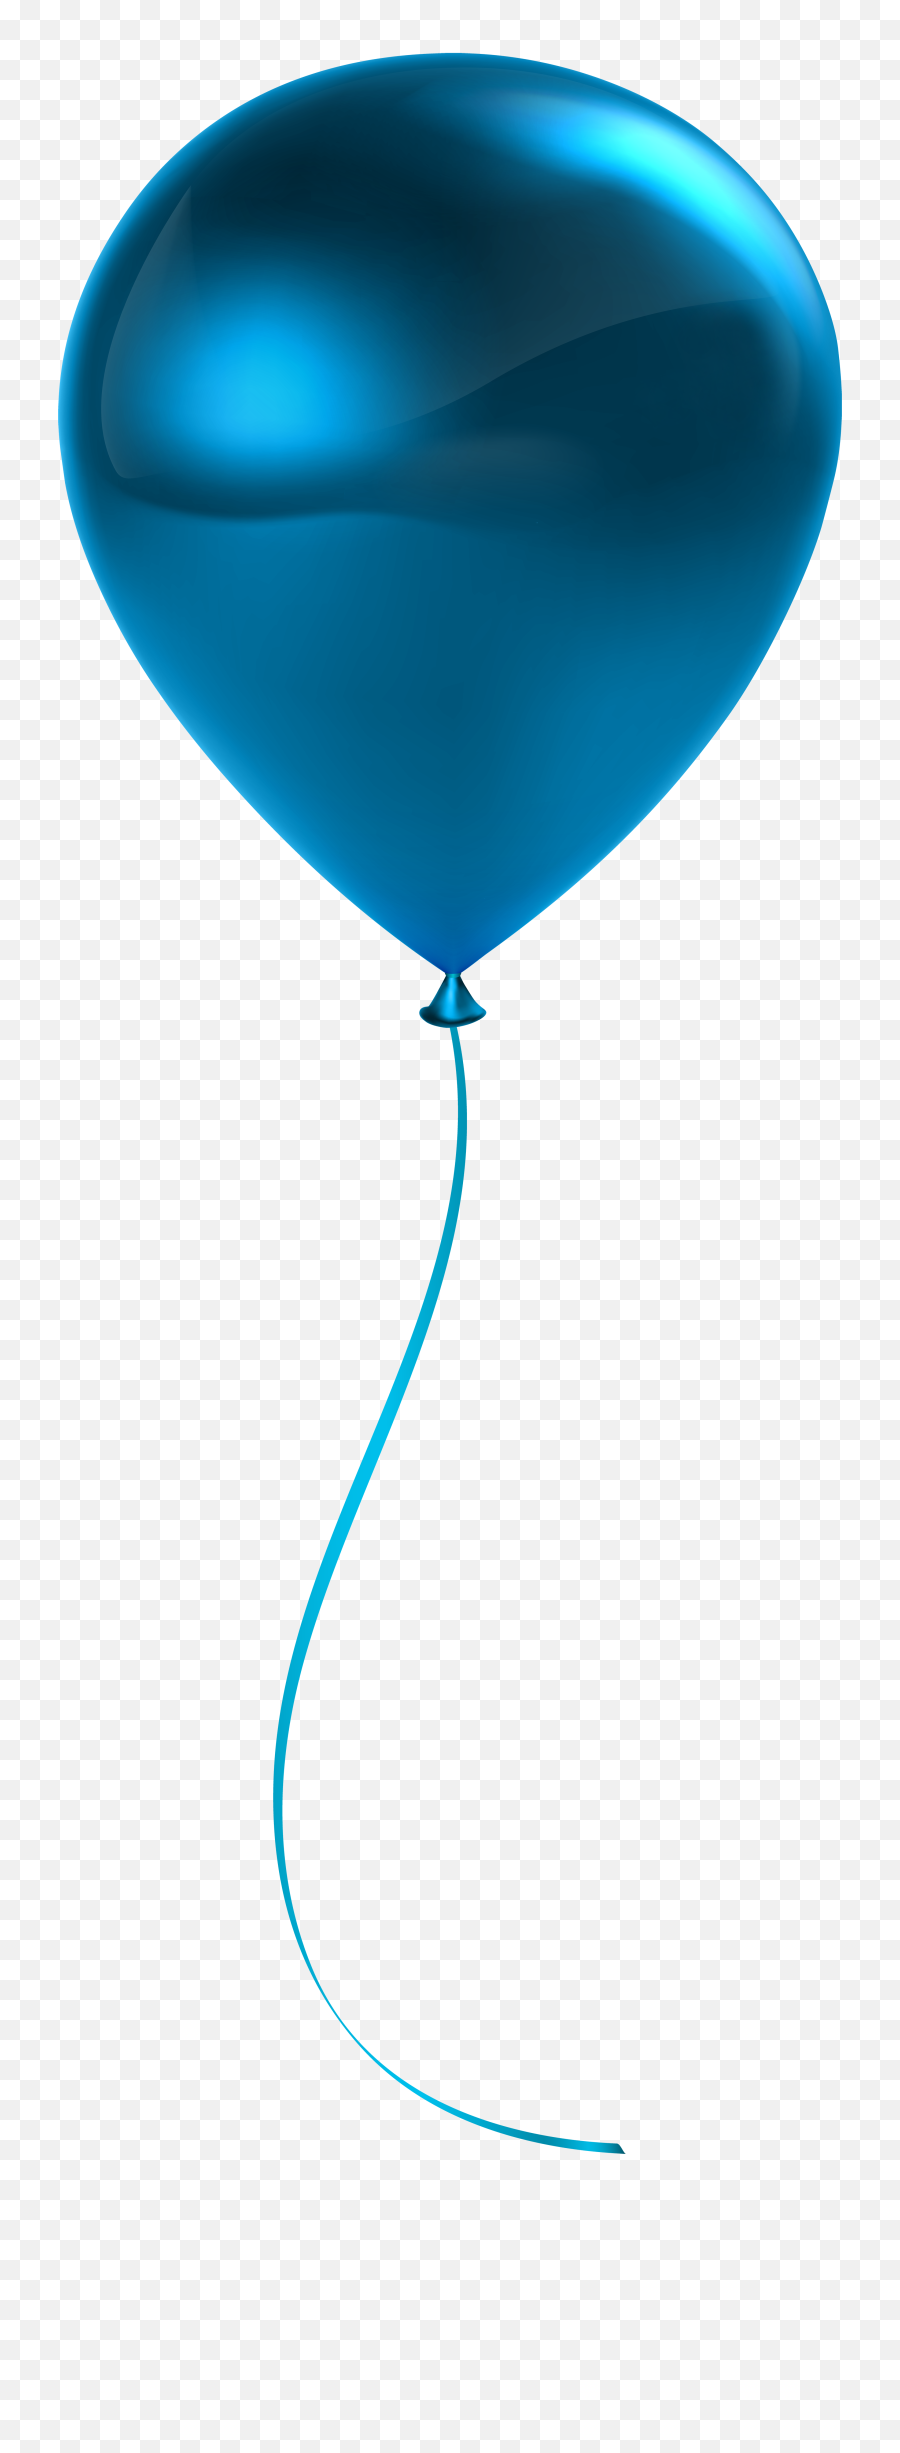 Balloon Transparent Background Free Download